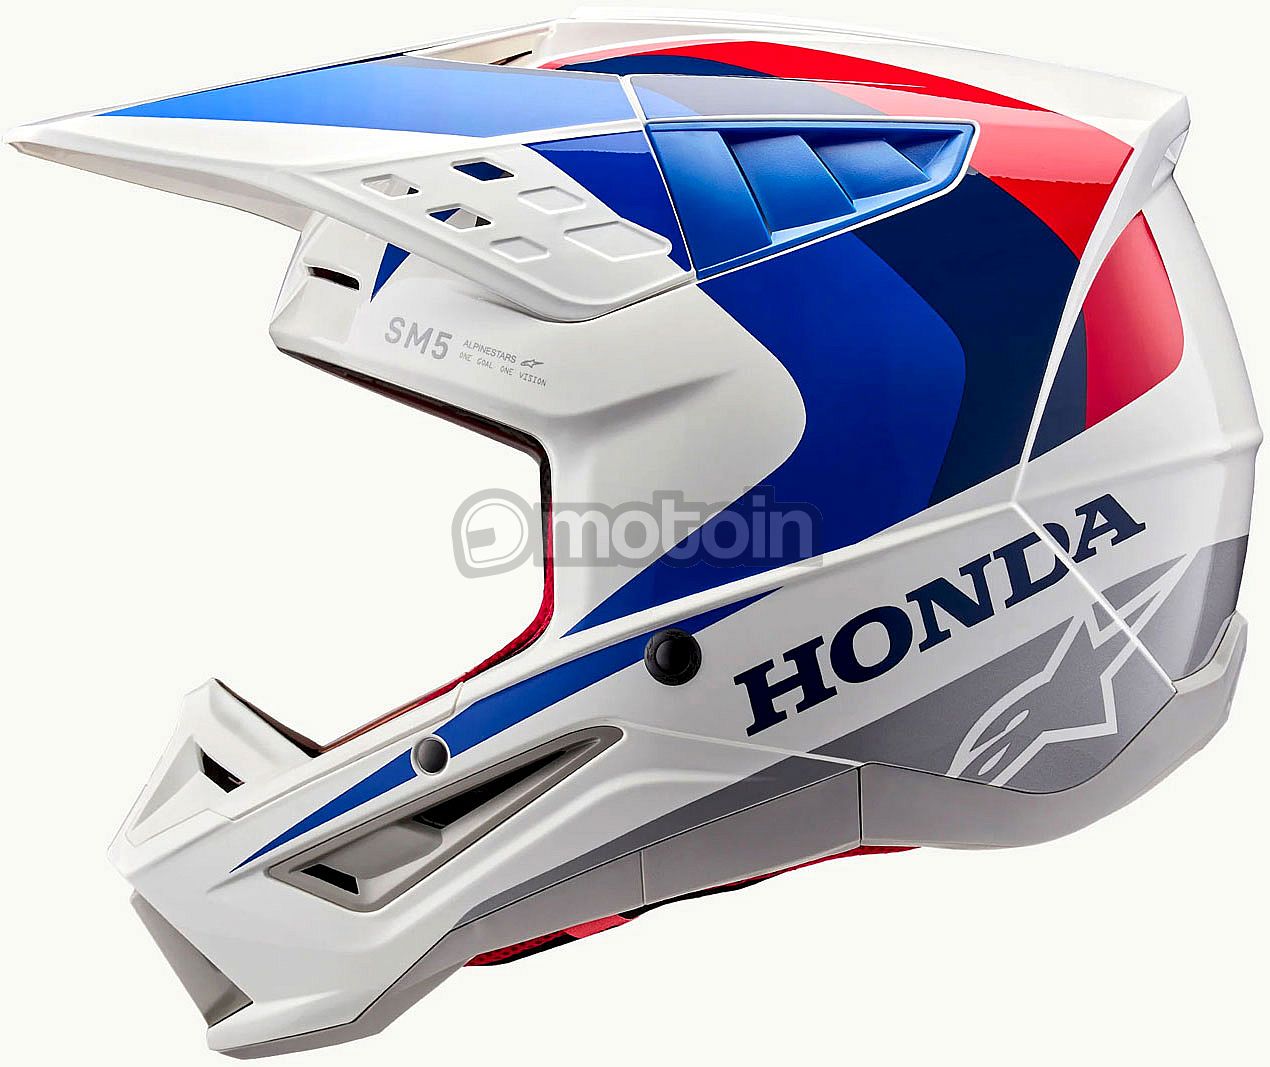 Alpinestars S-M5 Honda, casco cruzado